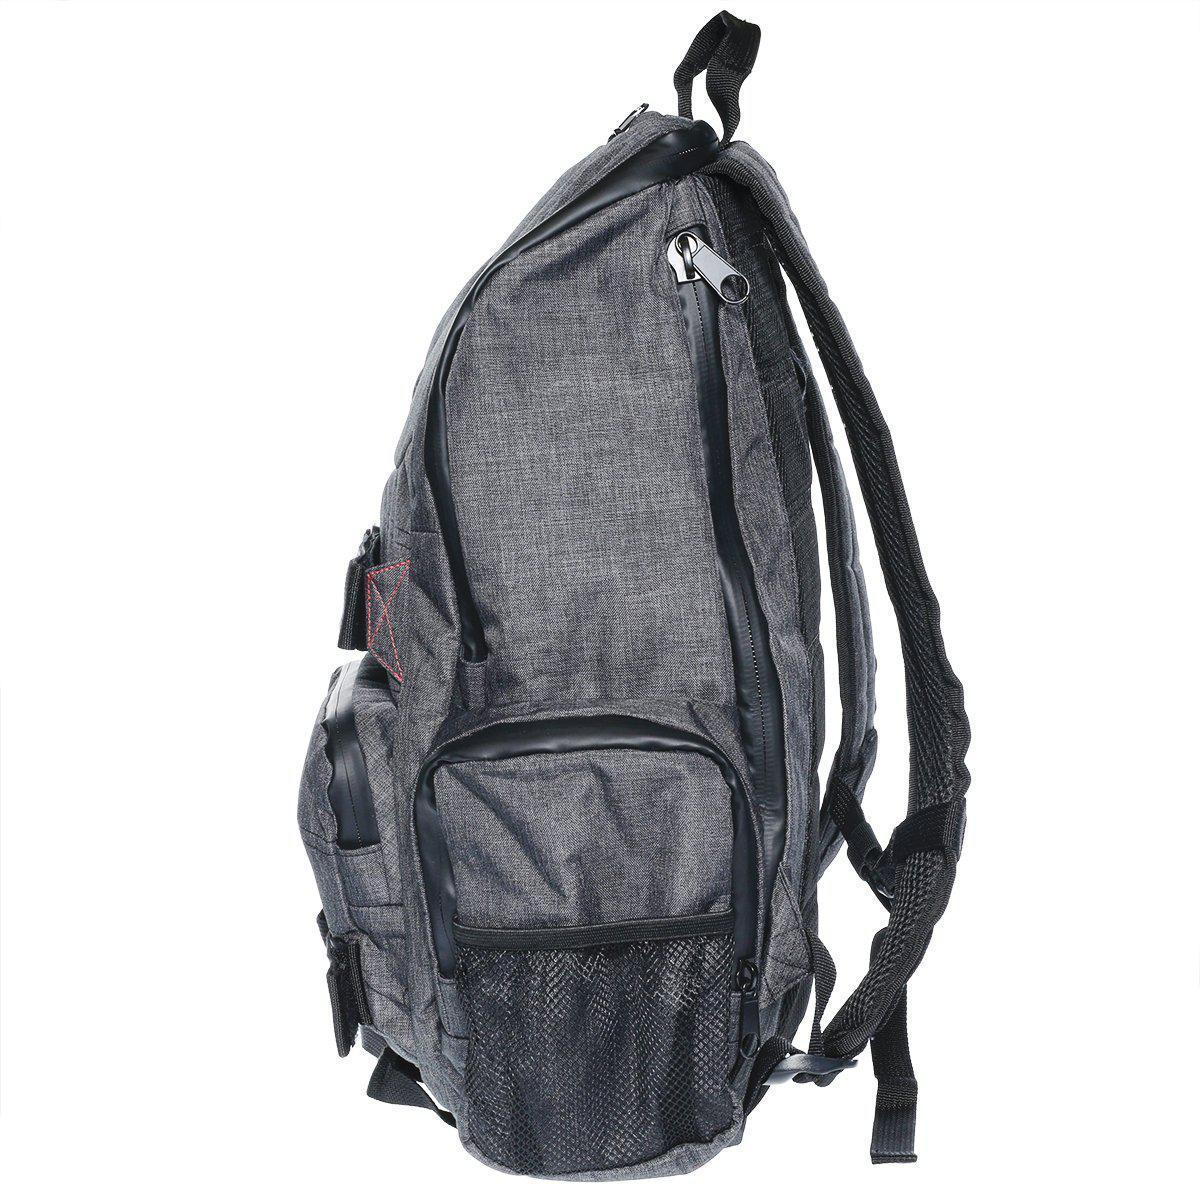 odor proof backpack